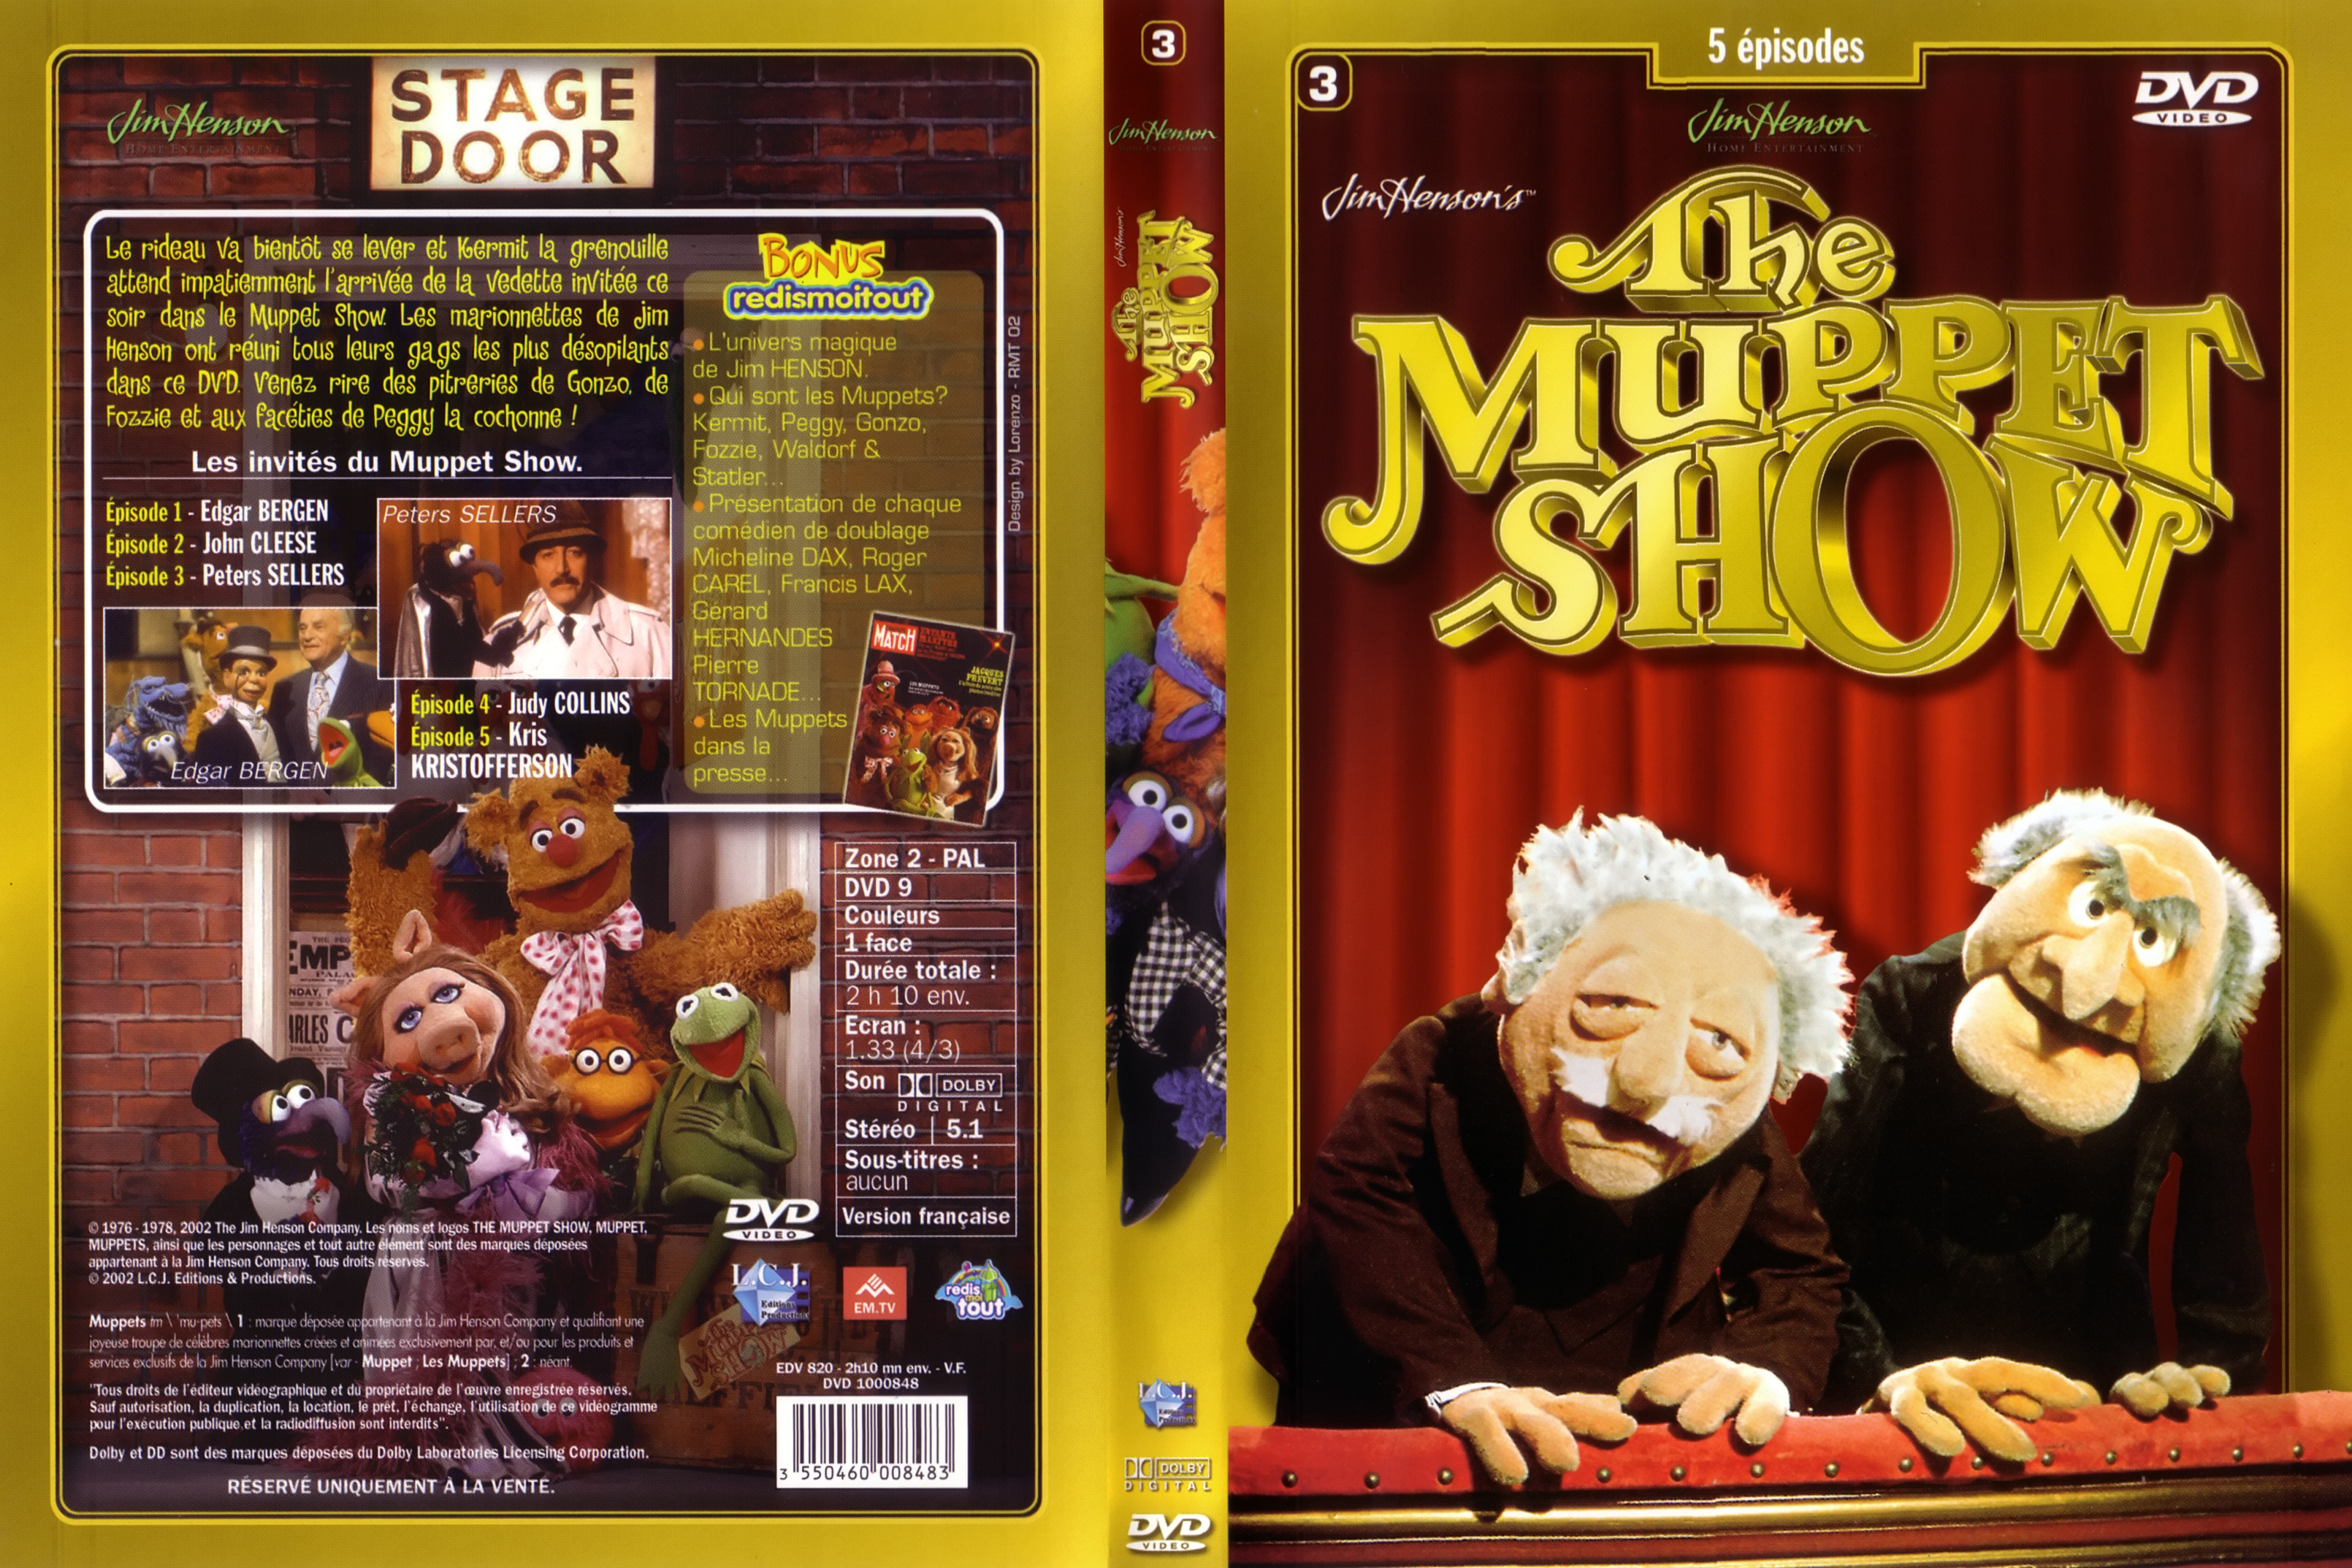 Jaquette DVD The muppet show vol 1 DVD 3